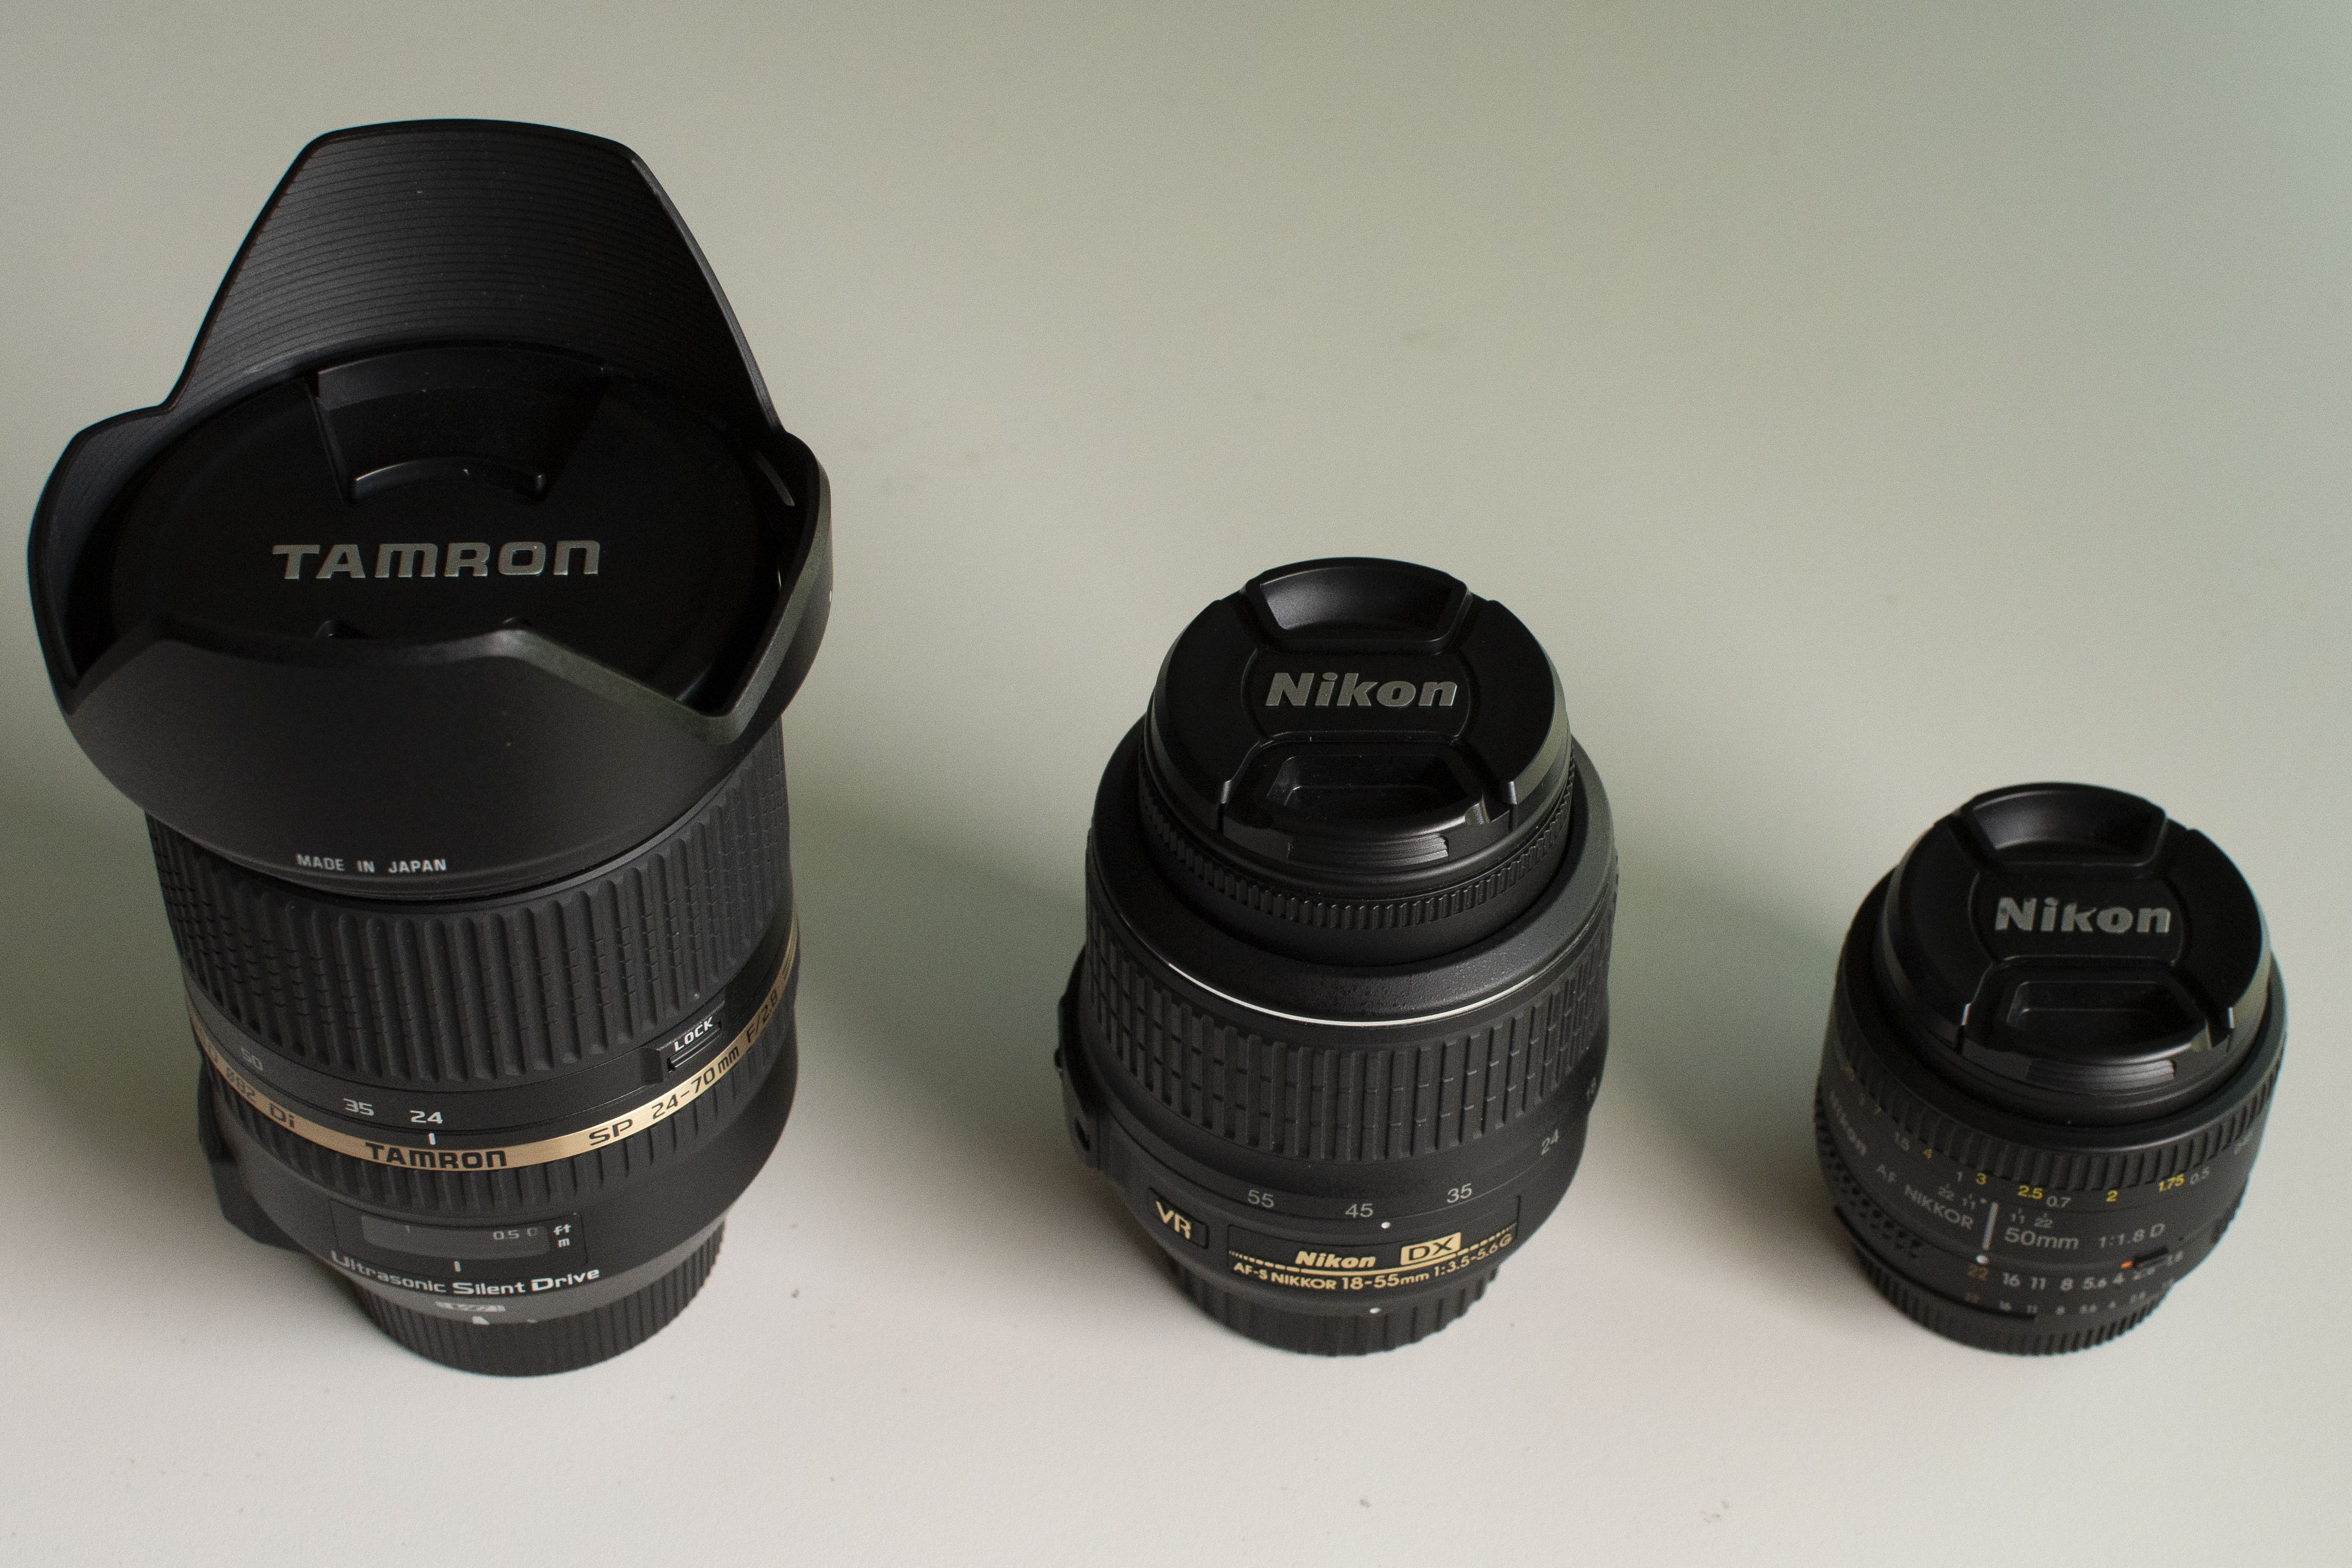 Tamron 24-70mm f/2.8 / Nikon 18-55mm f/3.5-f/5.6 / Nikon 50mm f/1.8 Lenses